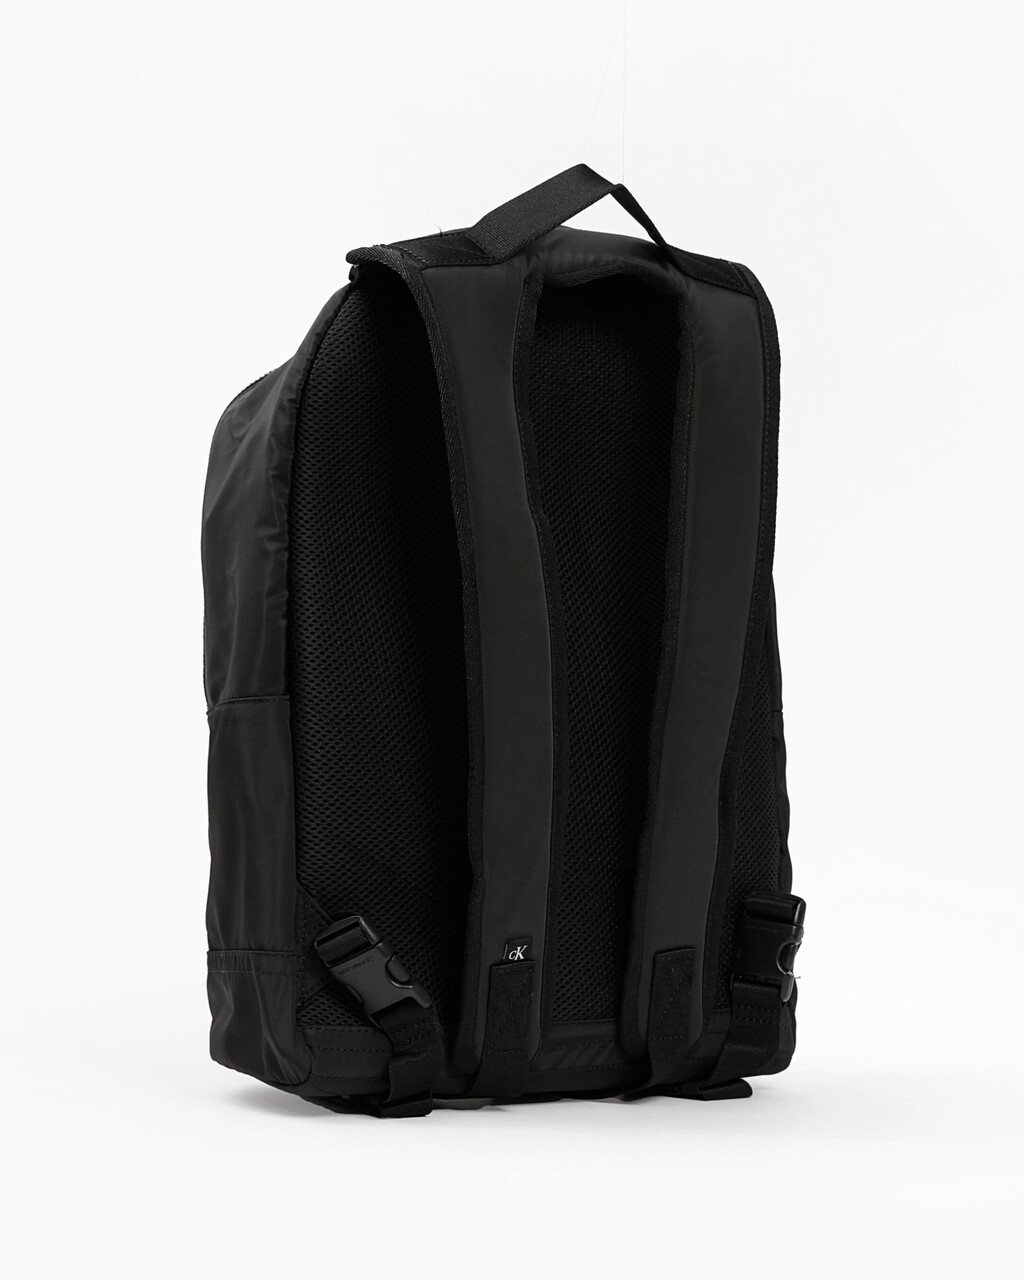 Reversible Campus Backpack, BLACK/SILVER, hi-res